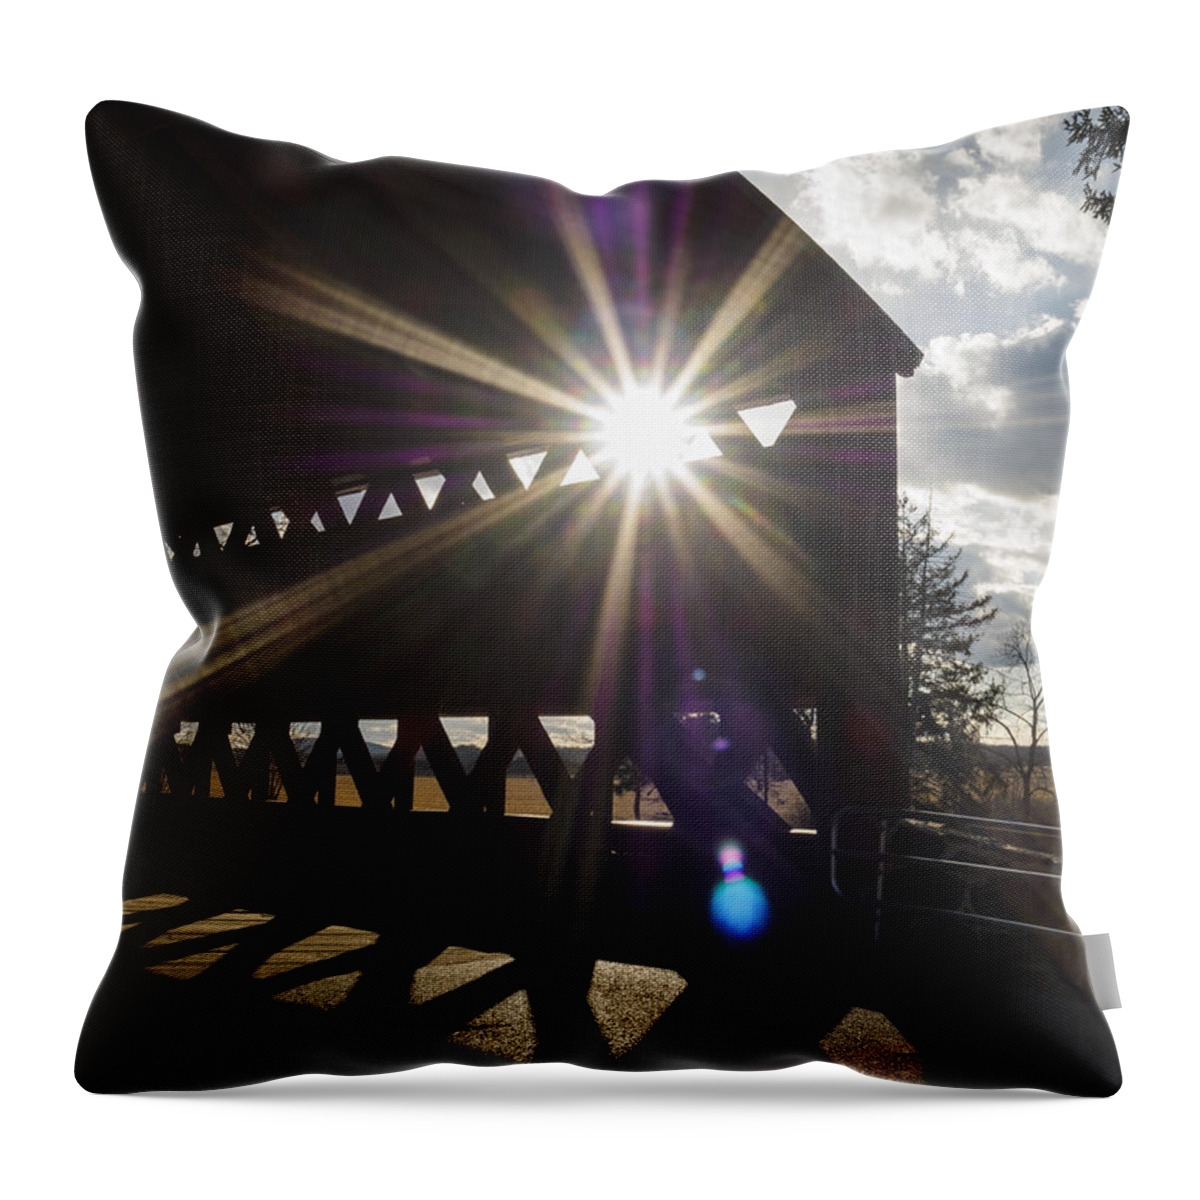 Adams Throw Pillow featuring the photograph Sunlight through Sachs Covered Bridge by Marianne Campolongo